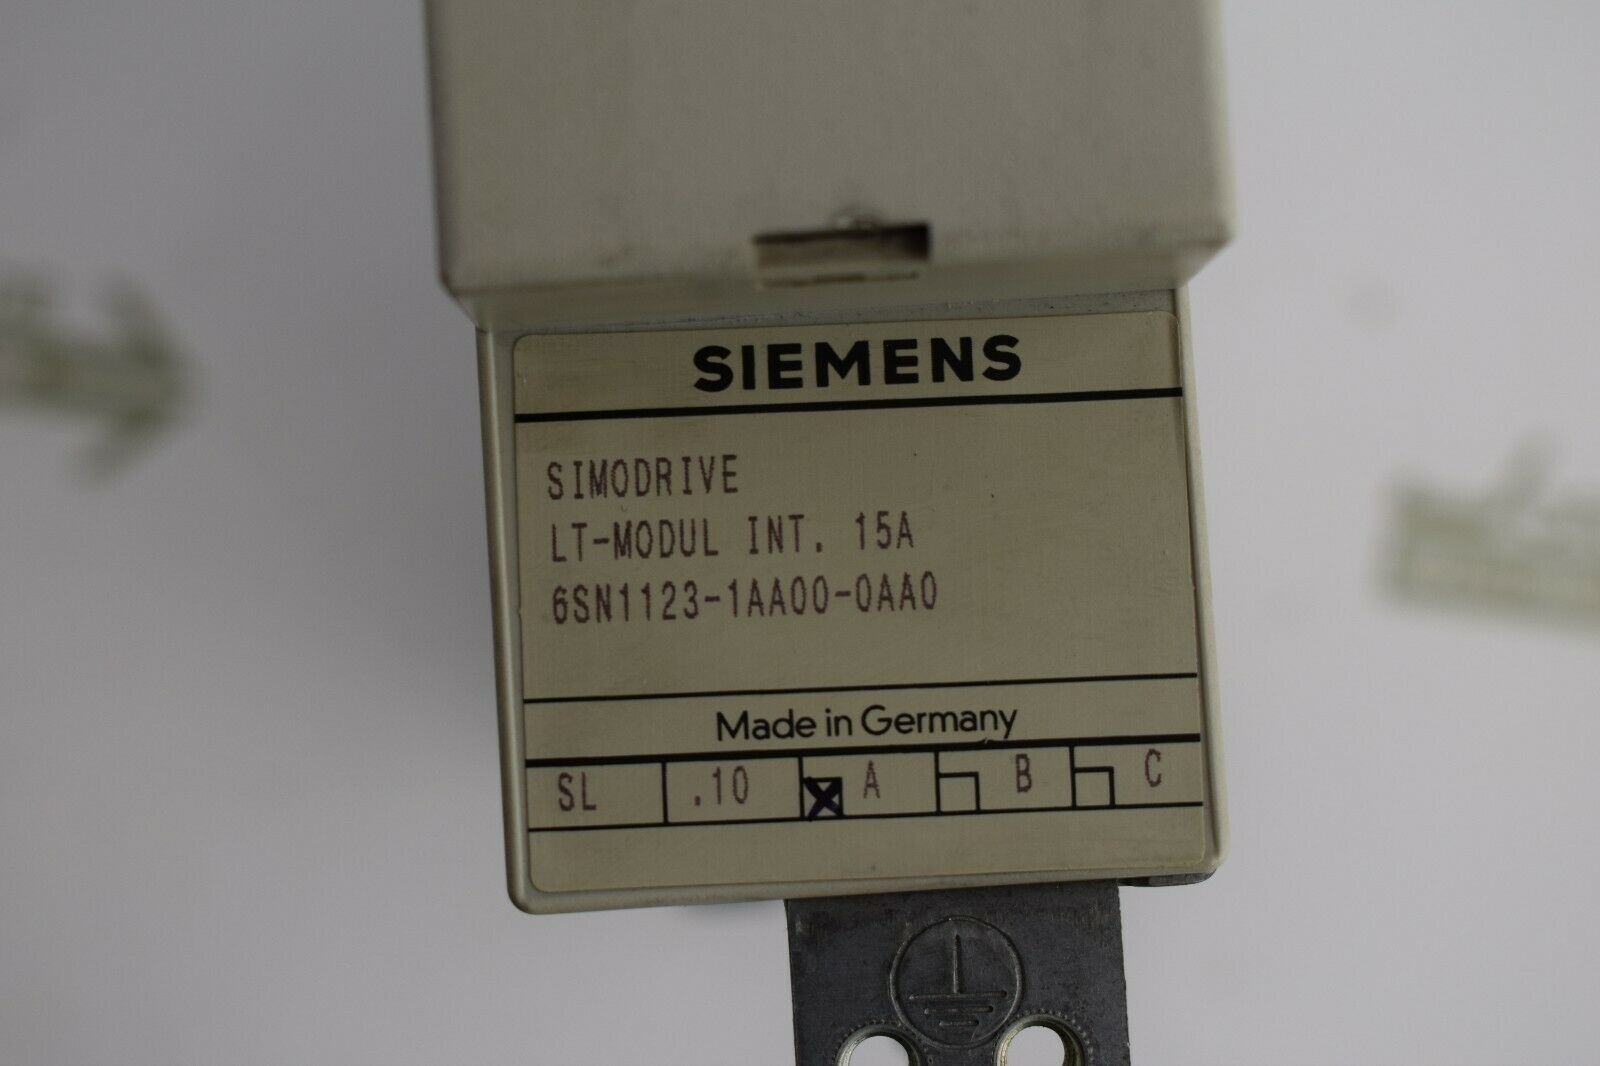 Siemens simodrive LT-Modul 6SN1 123-1AA00-0AA0 ( 6SN1123-1AA00-0AA0 )